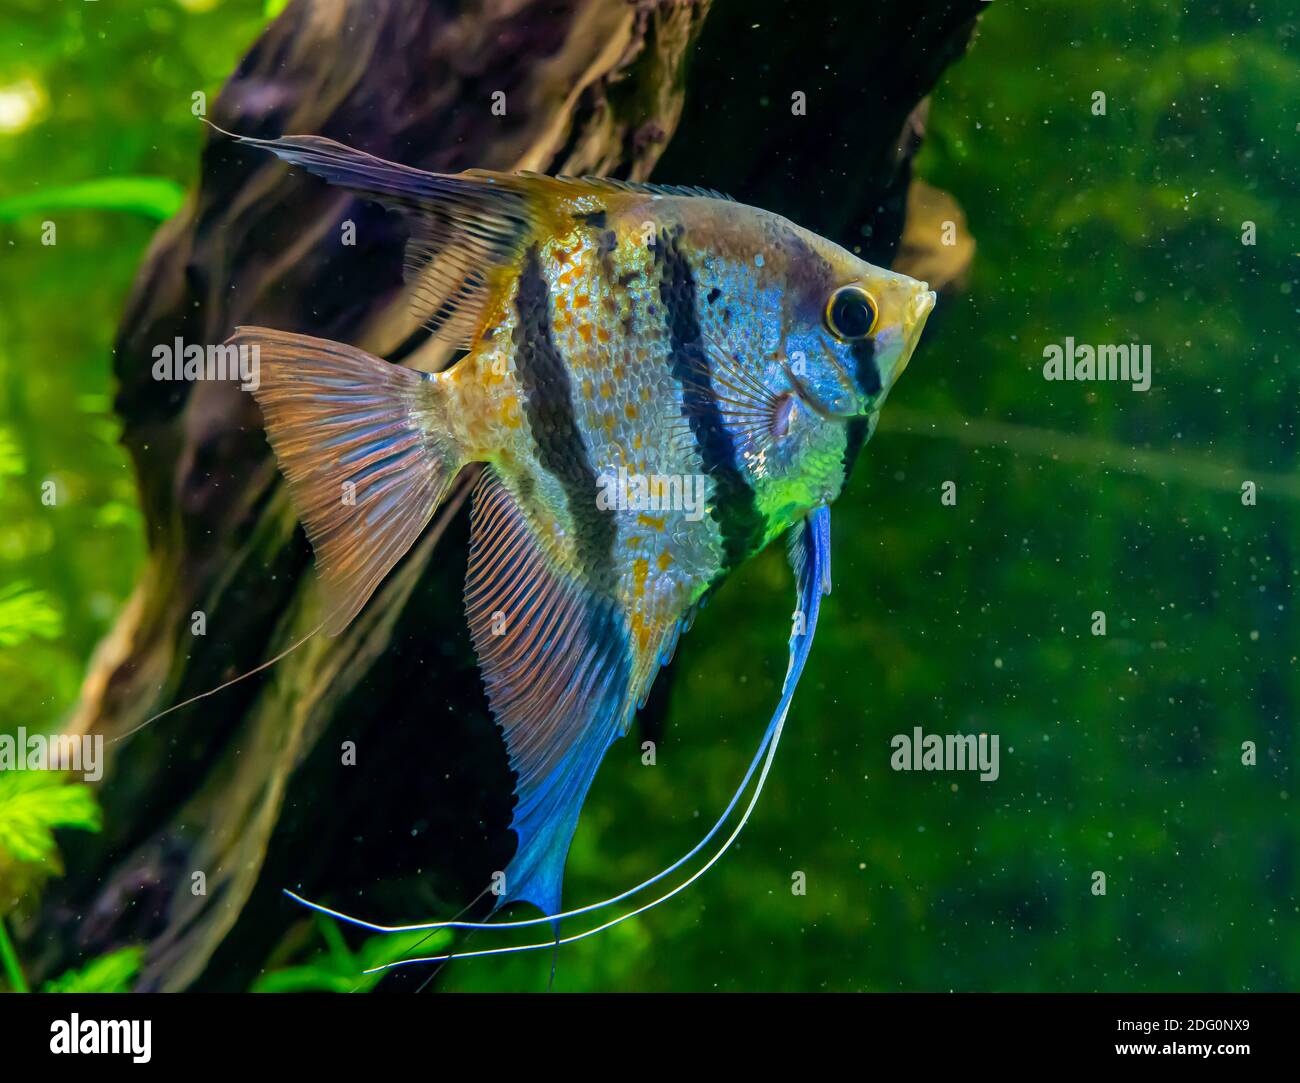 Un pez ángel de agua dulce común de la selva amazónica en un tanque de peces.  . Foto de alta calidad Fotografía de stock - Alamy